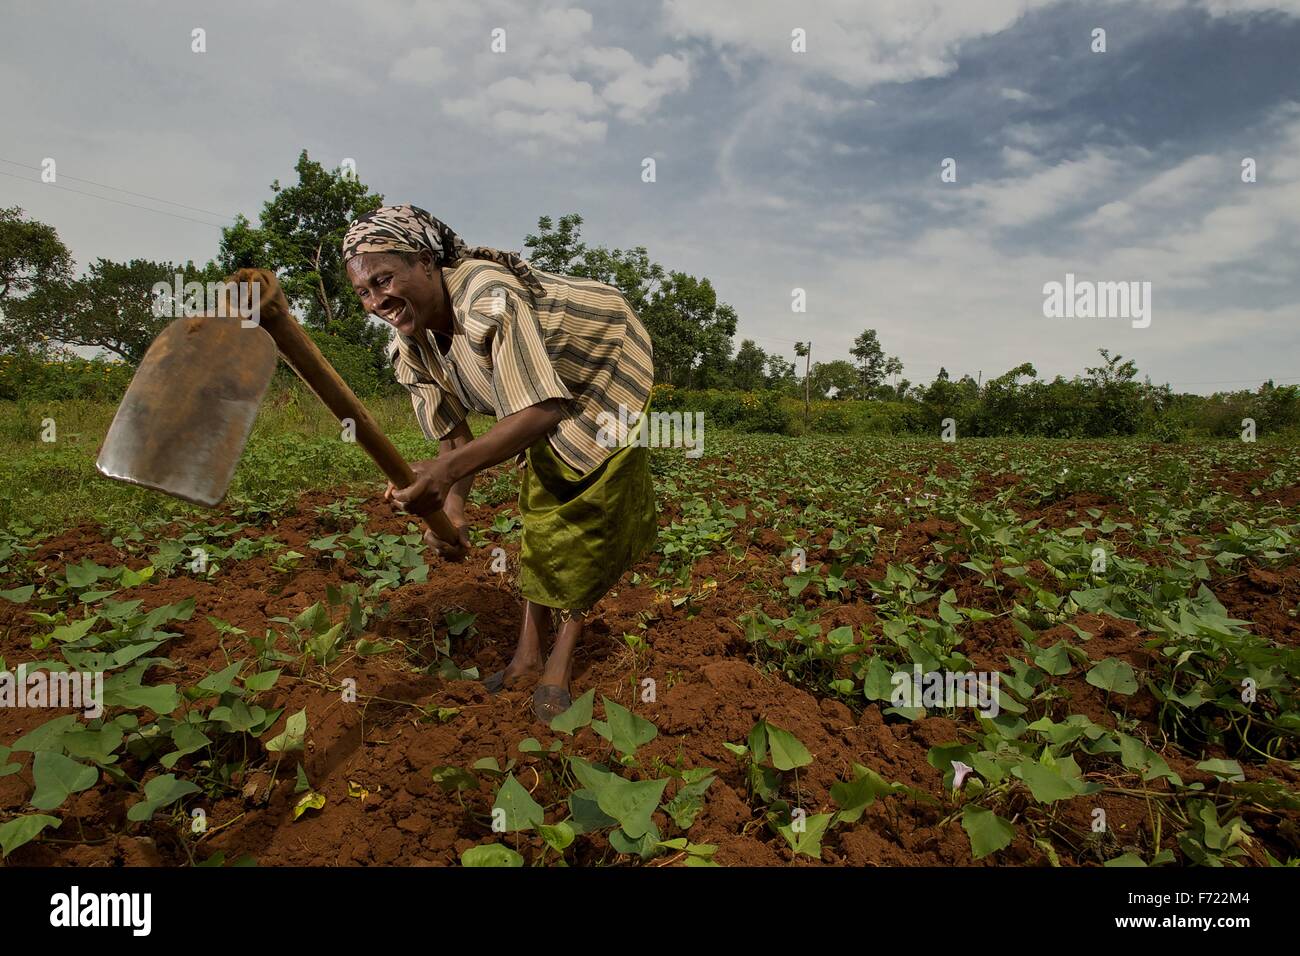 A Kenyan woman farmer uses a hoe to maintain her sweet potato field June 17, 2010 in Siranga, Kenya. Stock Photo